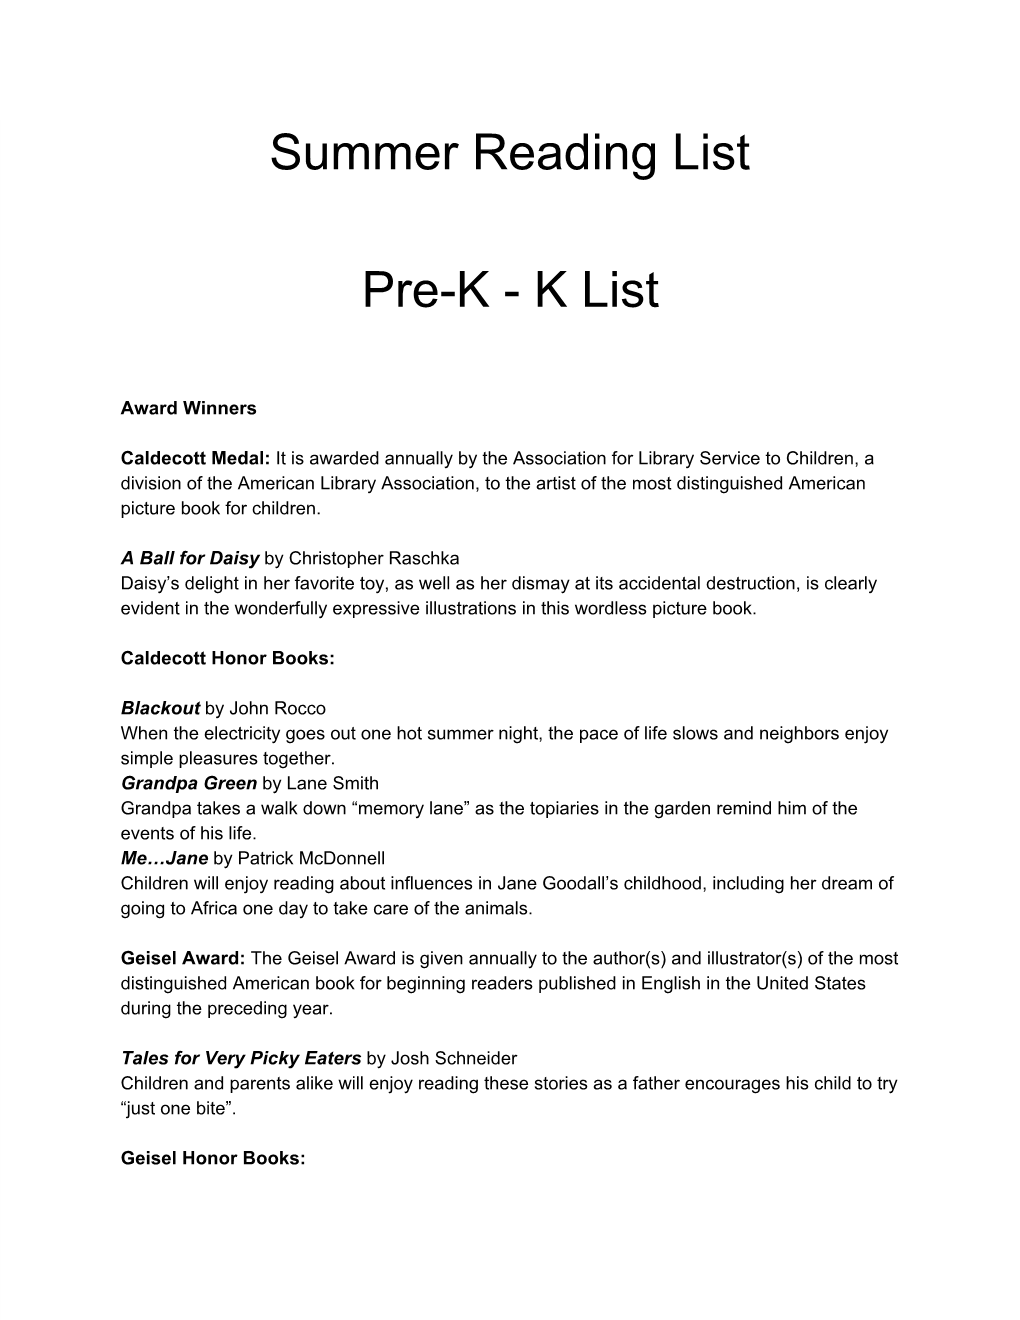 Summer Reading List Prek K List